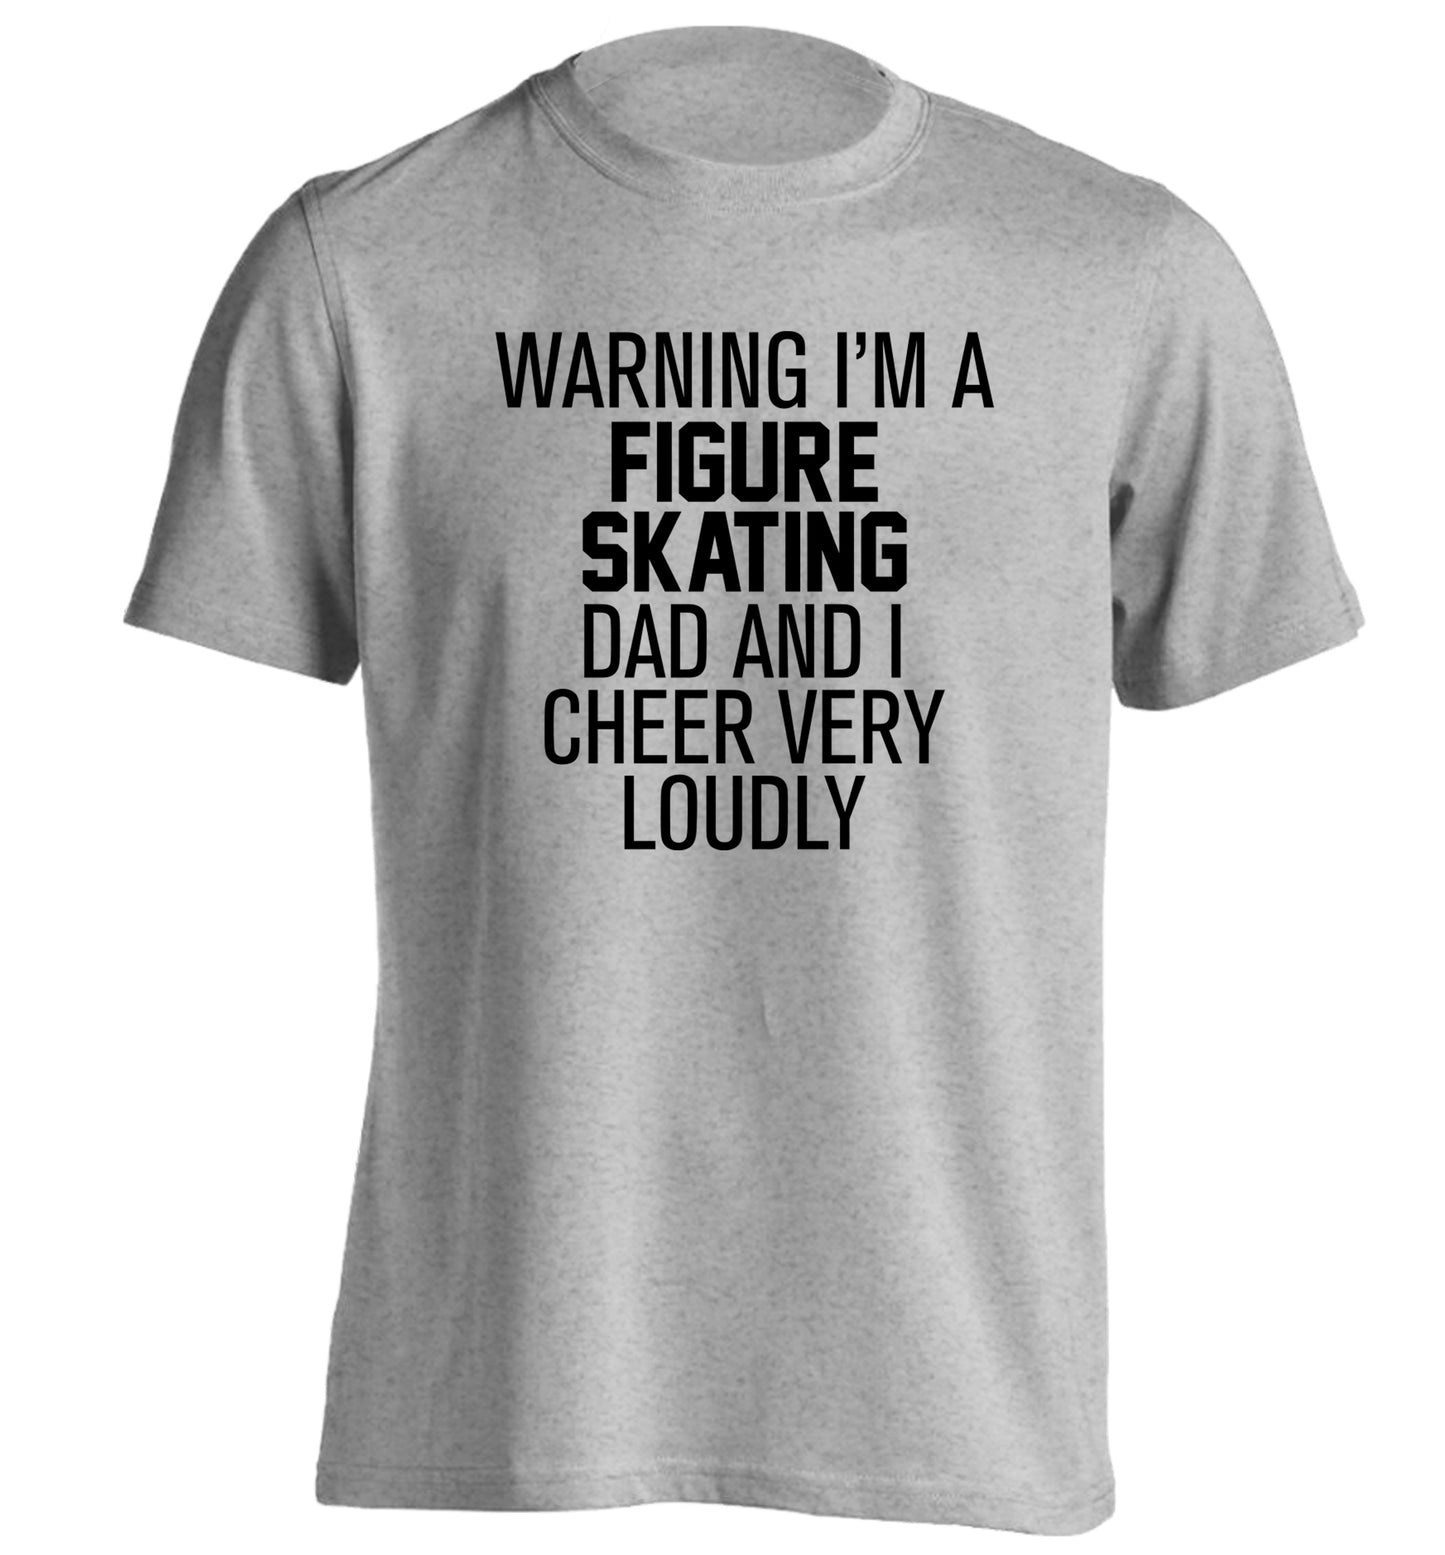 Warning I'm a figure skating dad and I cheer very loudly adults unisexgrey Tshirt 2XL